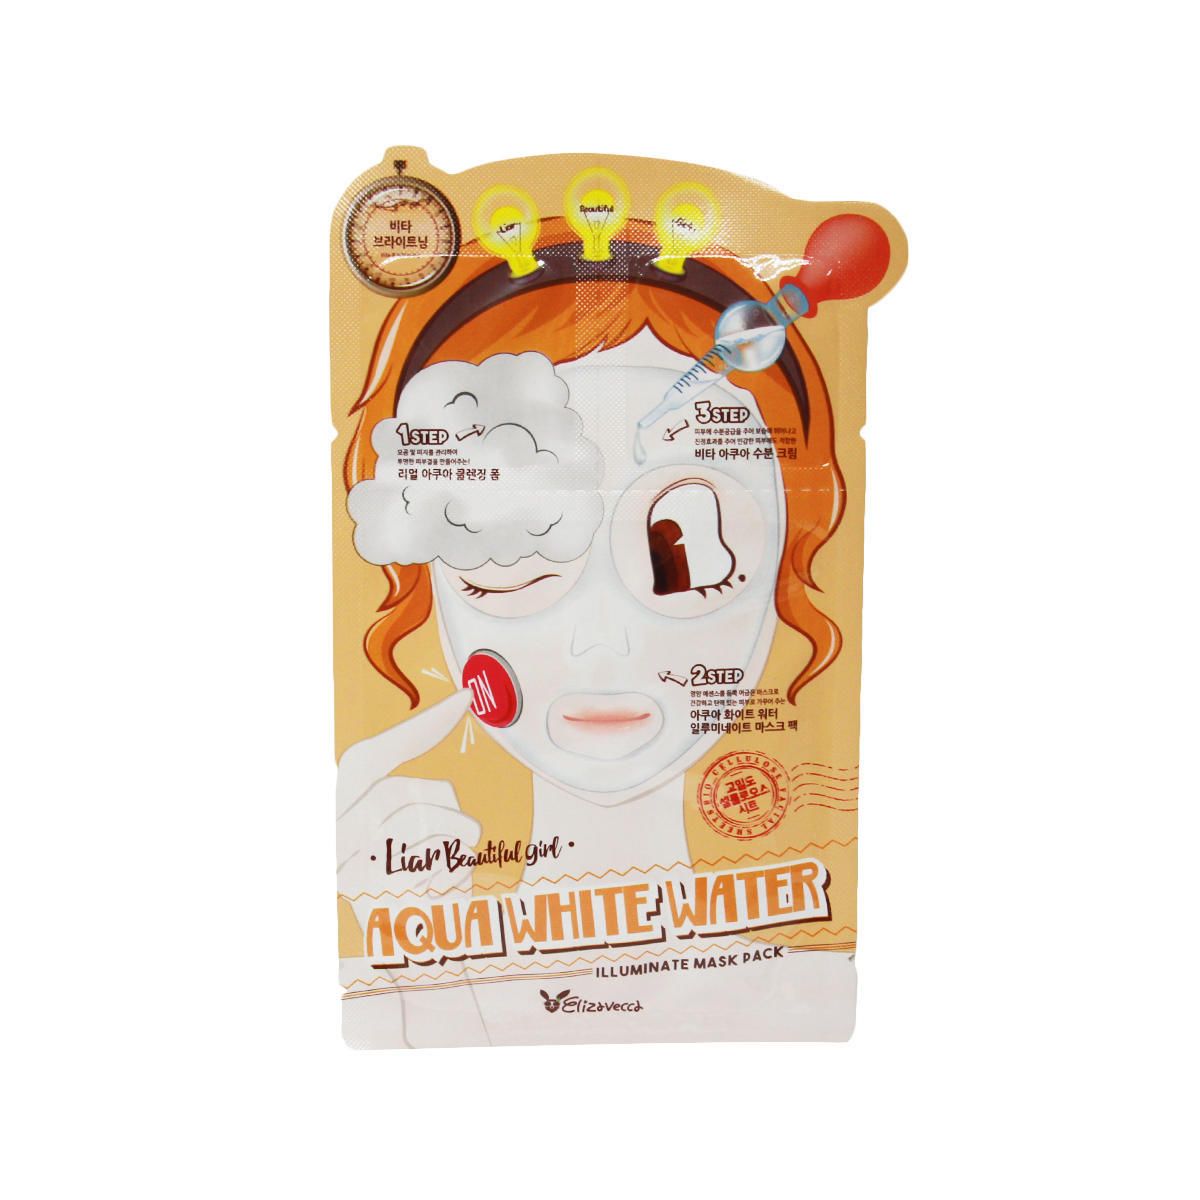 Elizavecca Маска увлажняющая Elizavecca Aqua White Water Illuminate Mask Pack